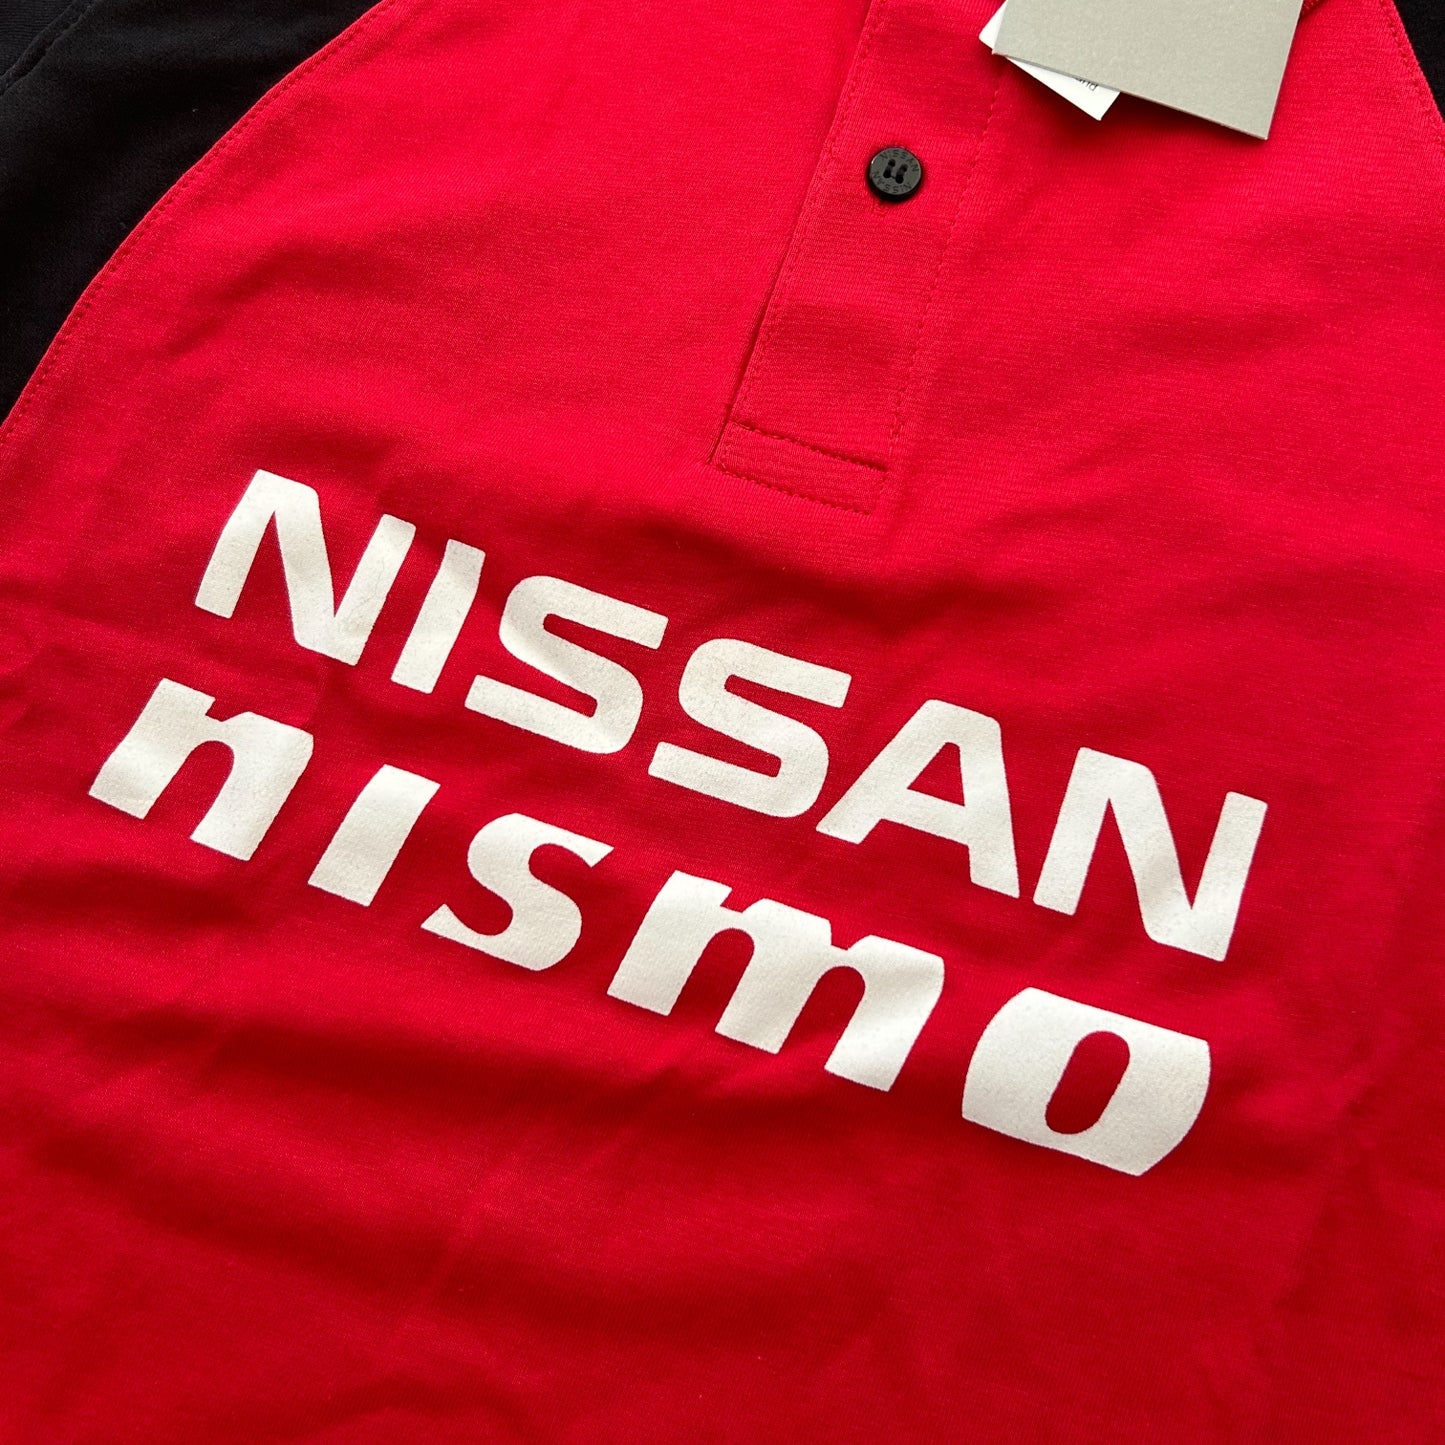 Nissan NISMO Logo Polo Shirt (Size: M)